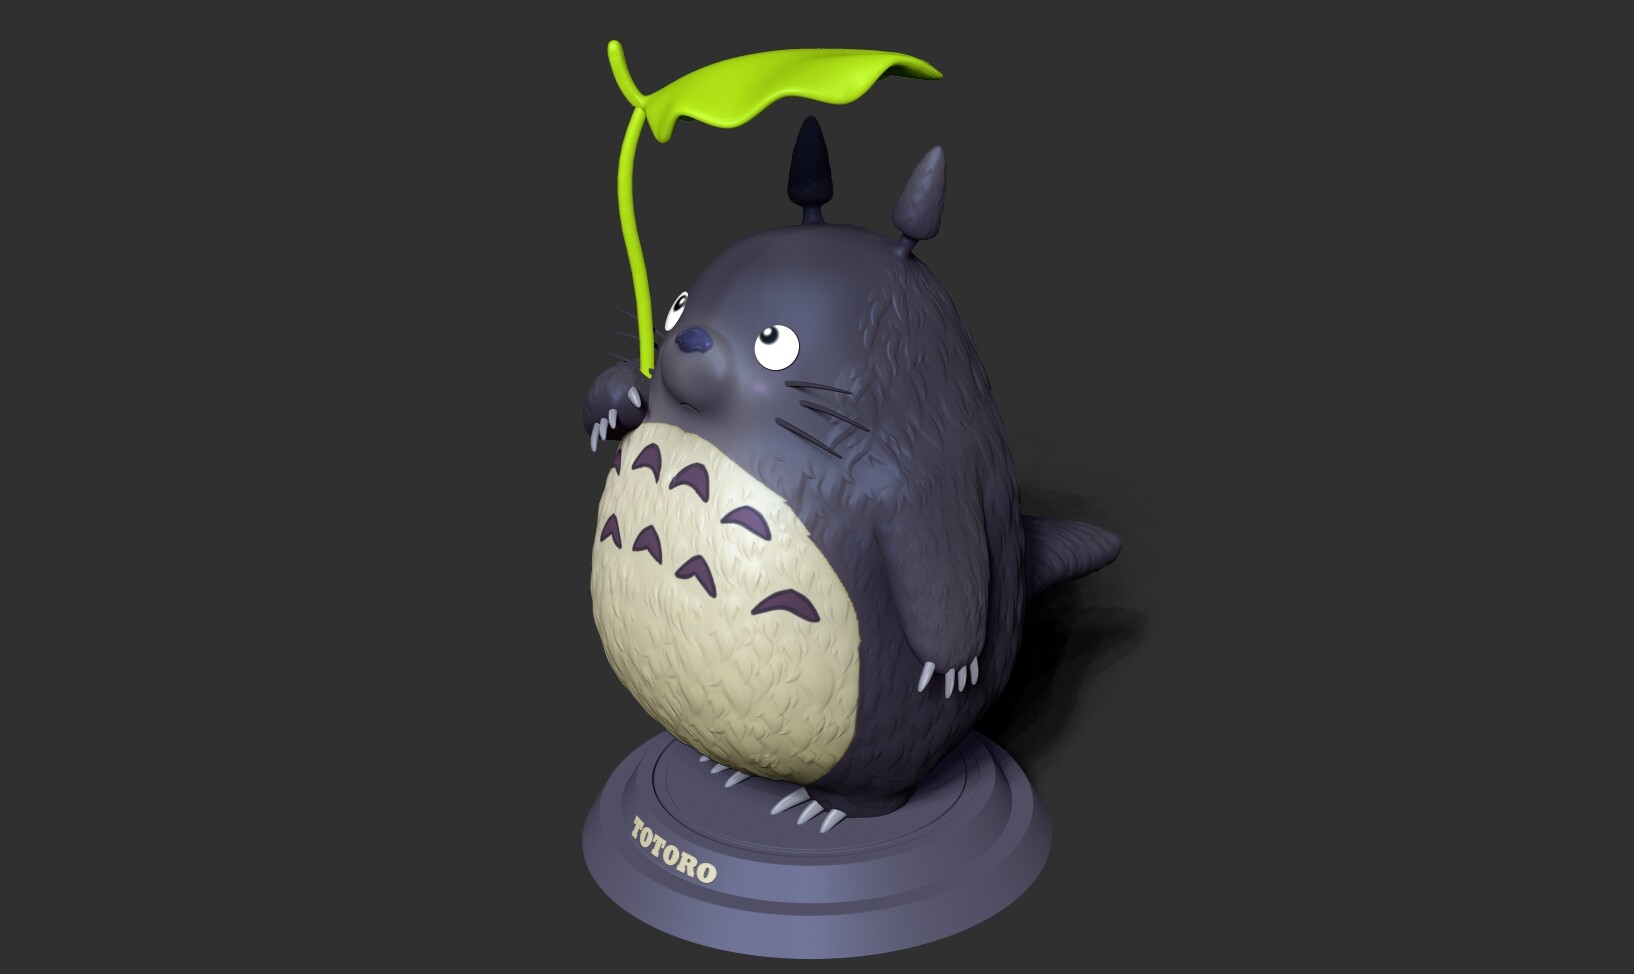 STL file Totoro Family- MY NEIGHBOR TOTORO-となりのトトロ-STUDIO GHIBLI-FANART  👪・Design to download and 3D print・Cults